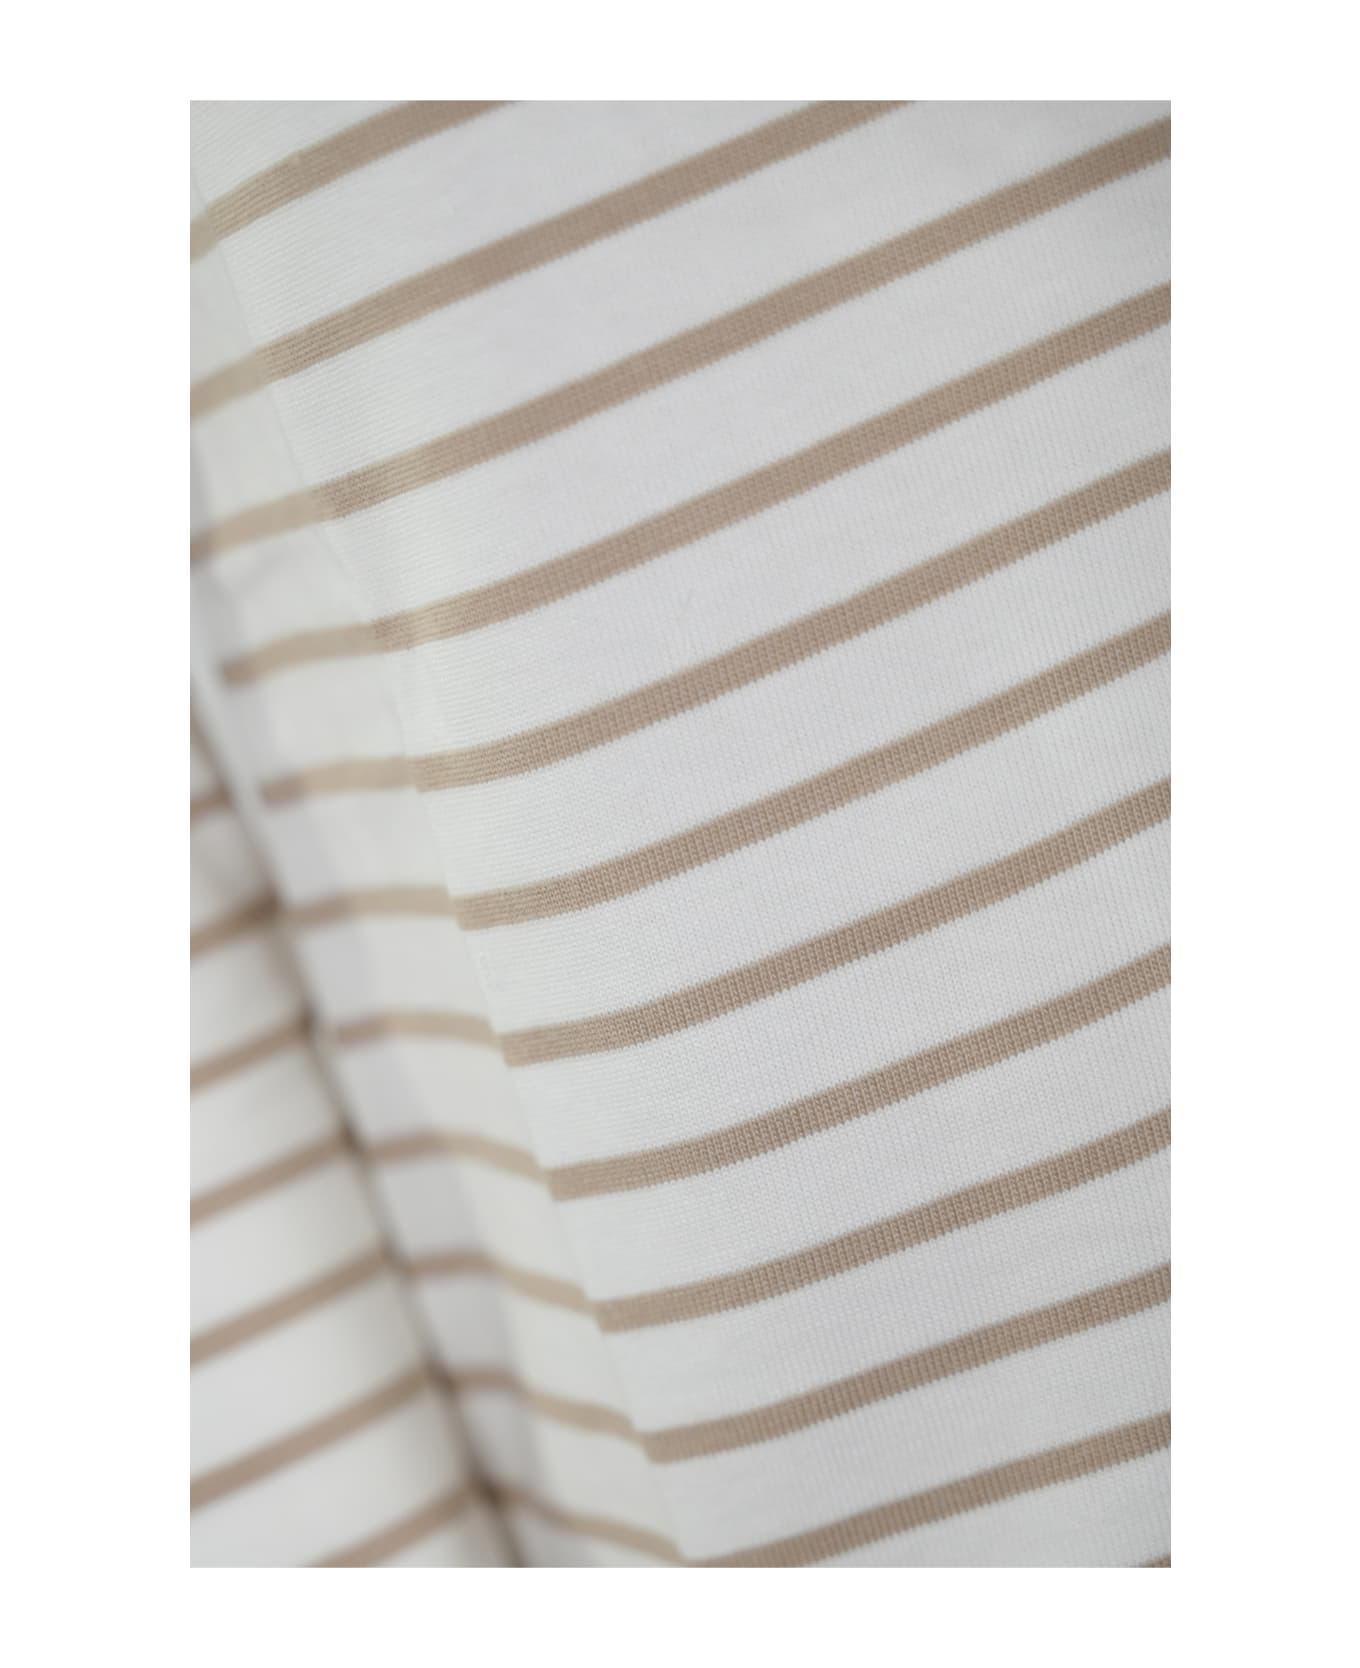 Weekend Max Mara 'erasmo' Striped Cotton Sweater - F.do bianco